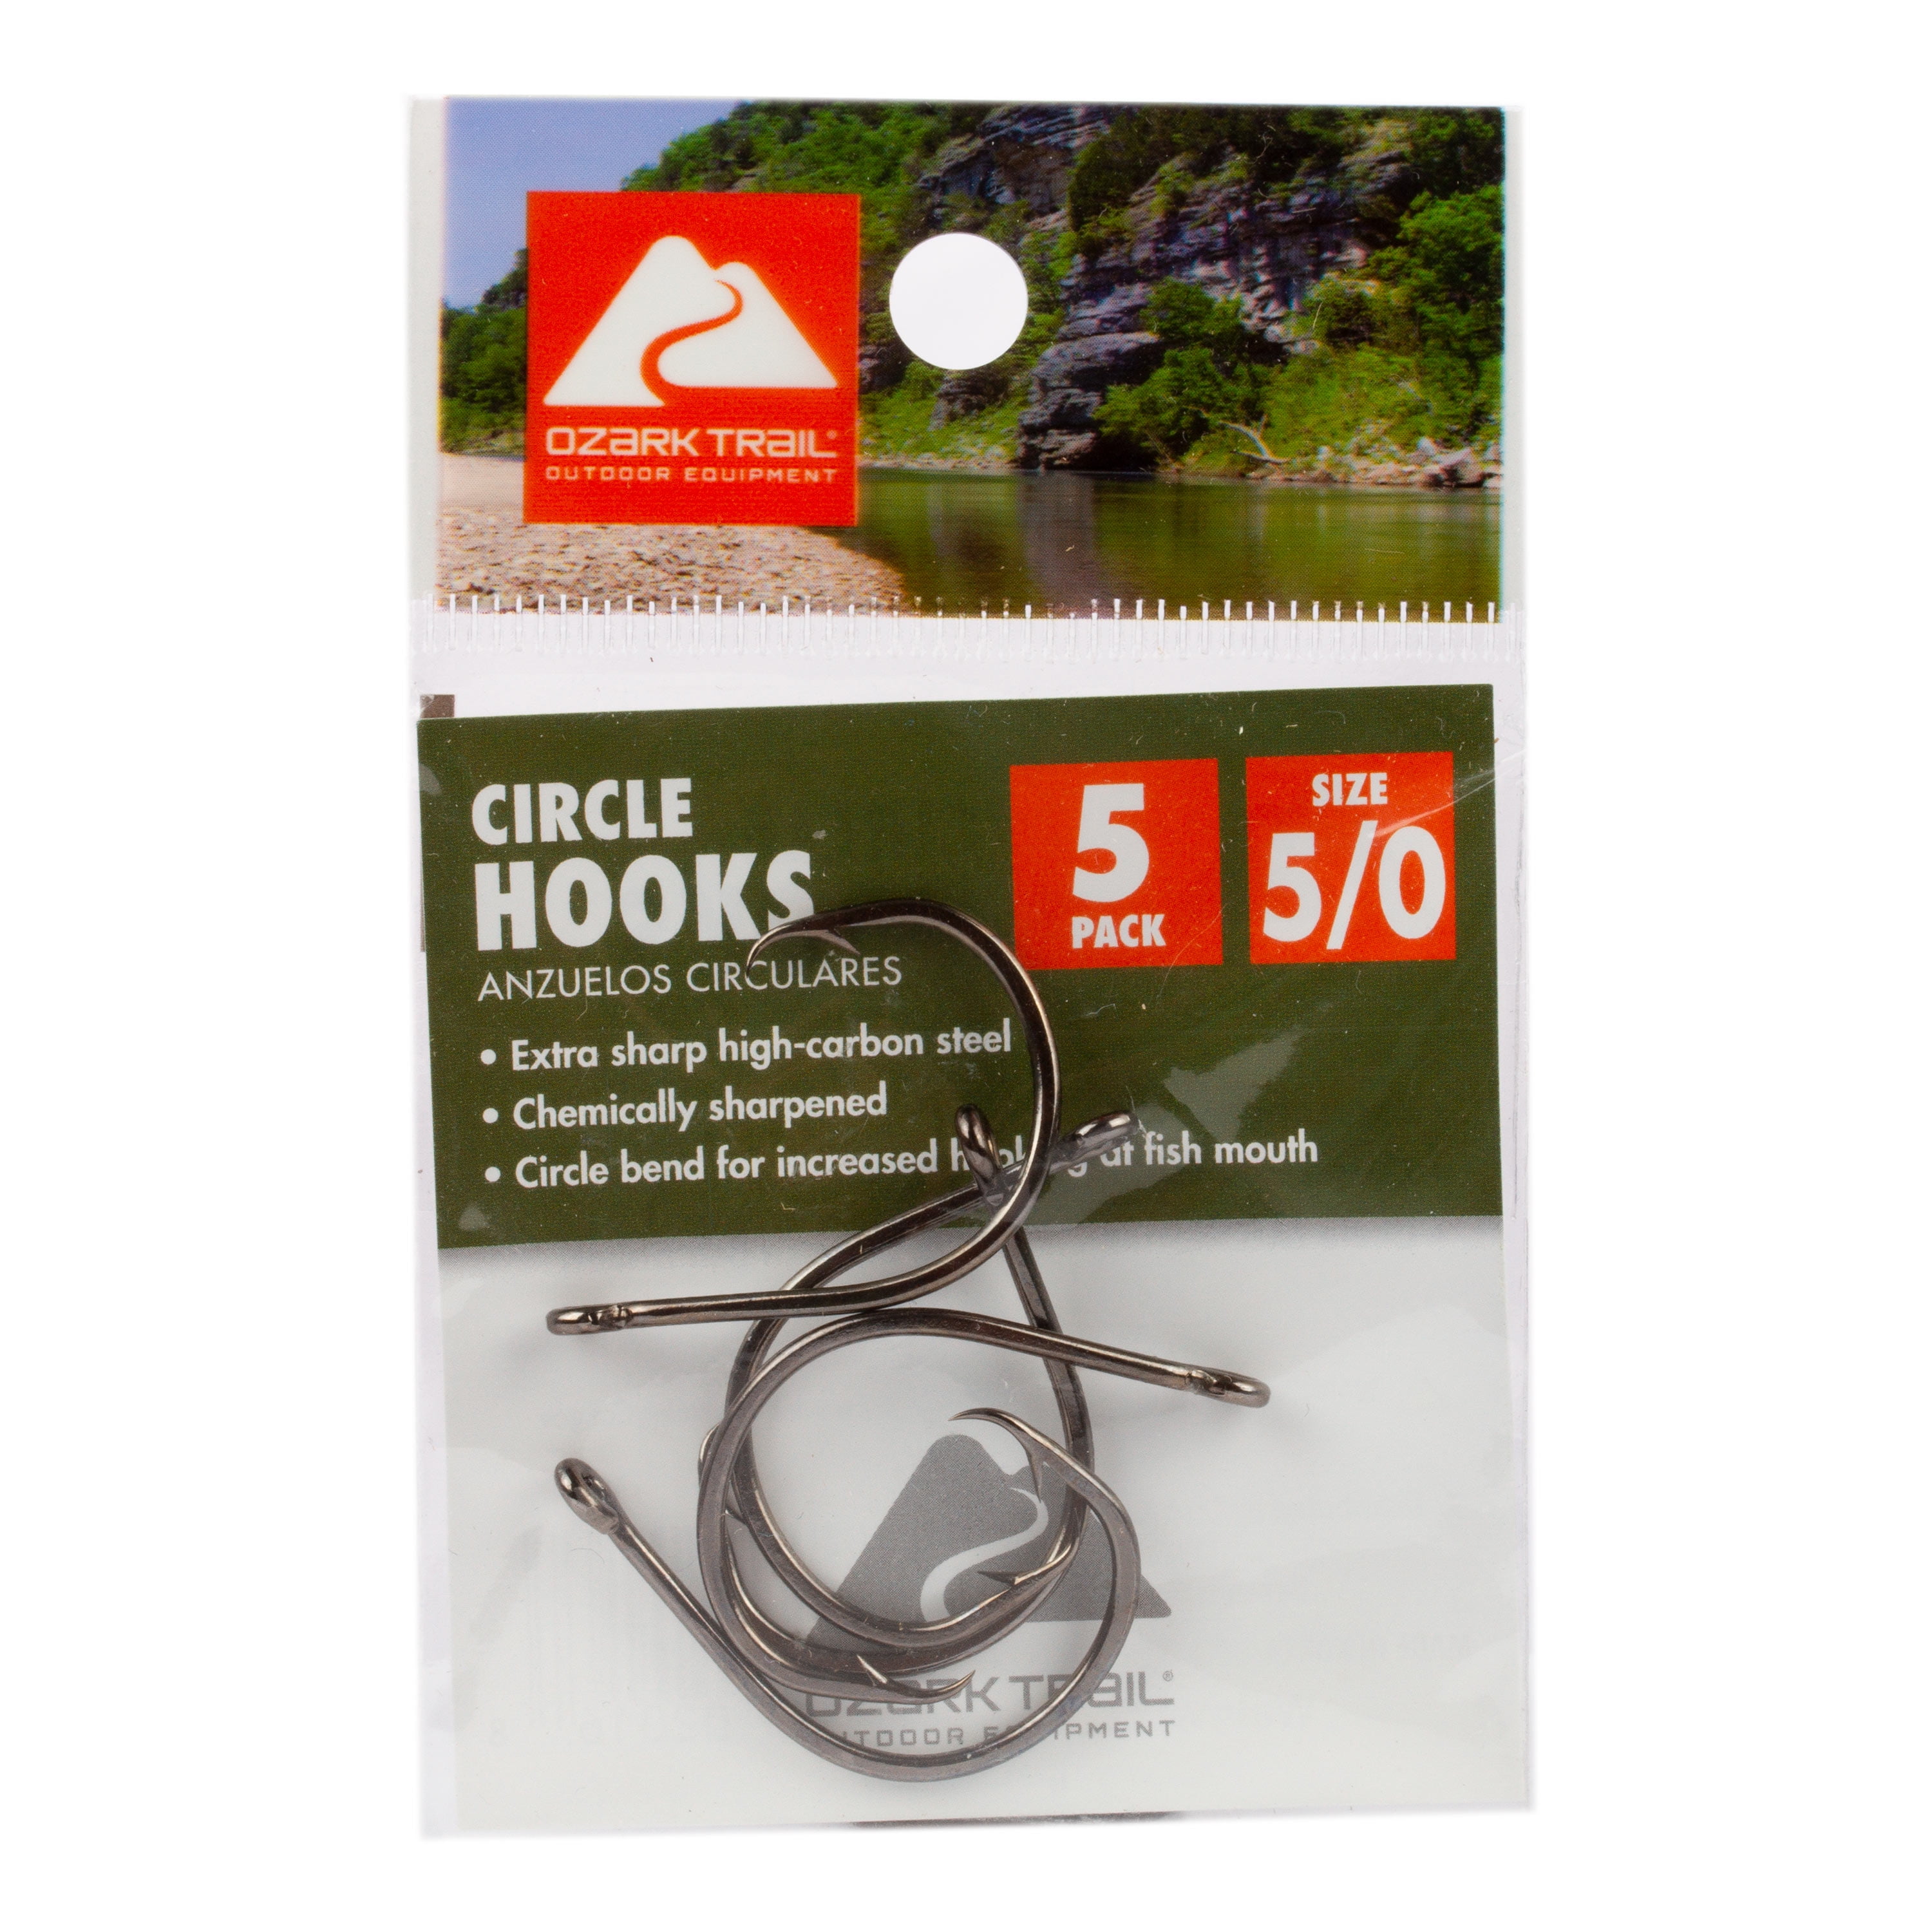 Ozark Trail 5/0 Premium Circle Hooks, 5 Count, Size: Assorted